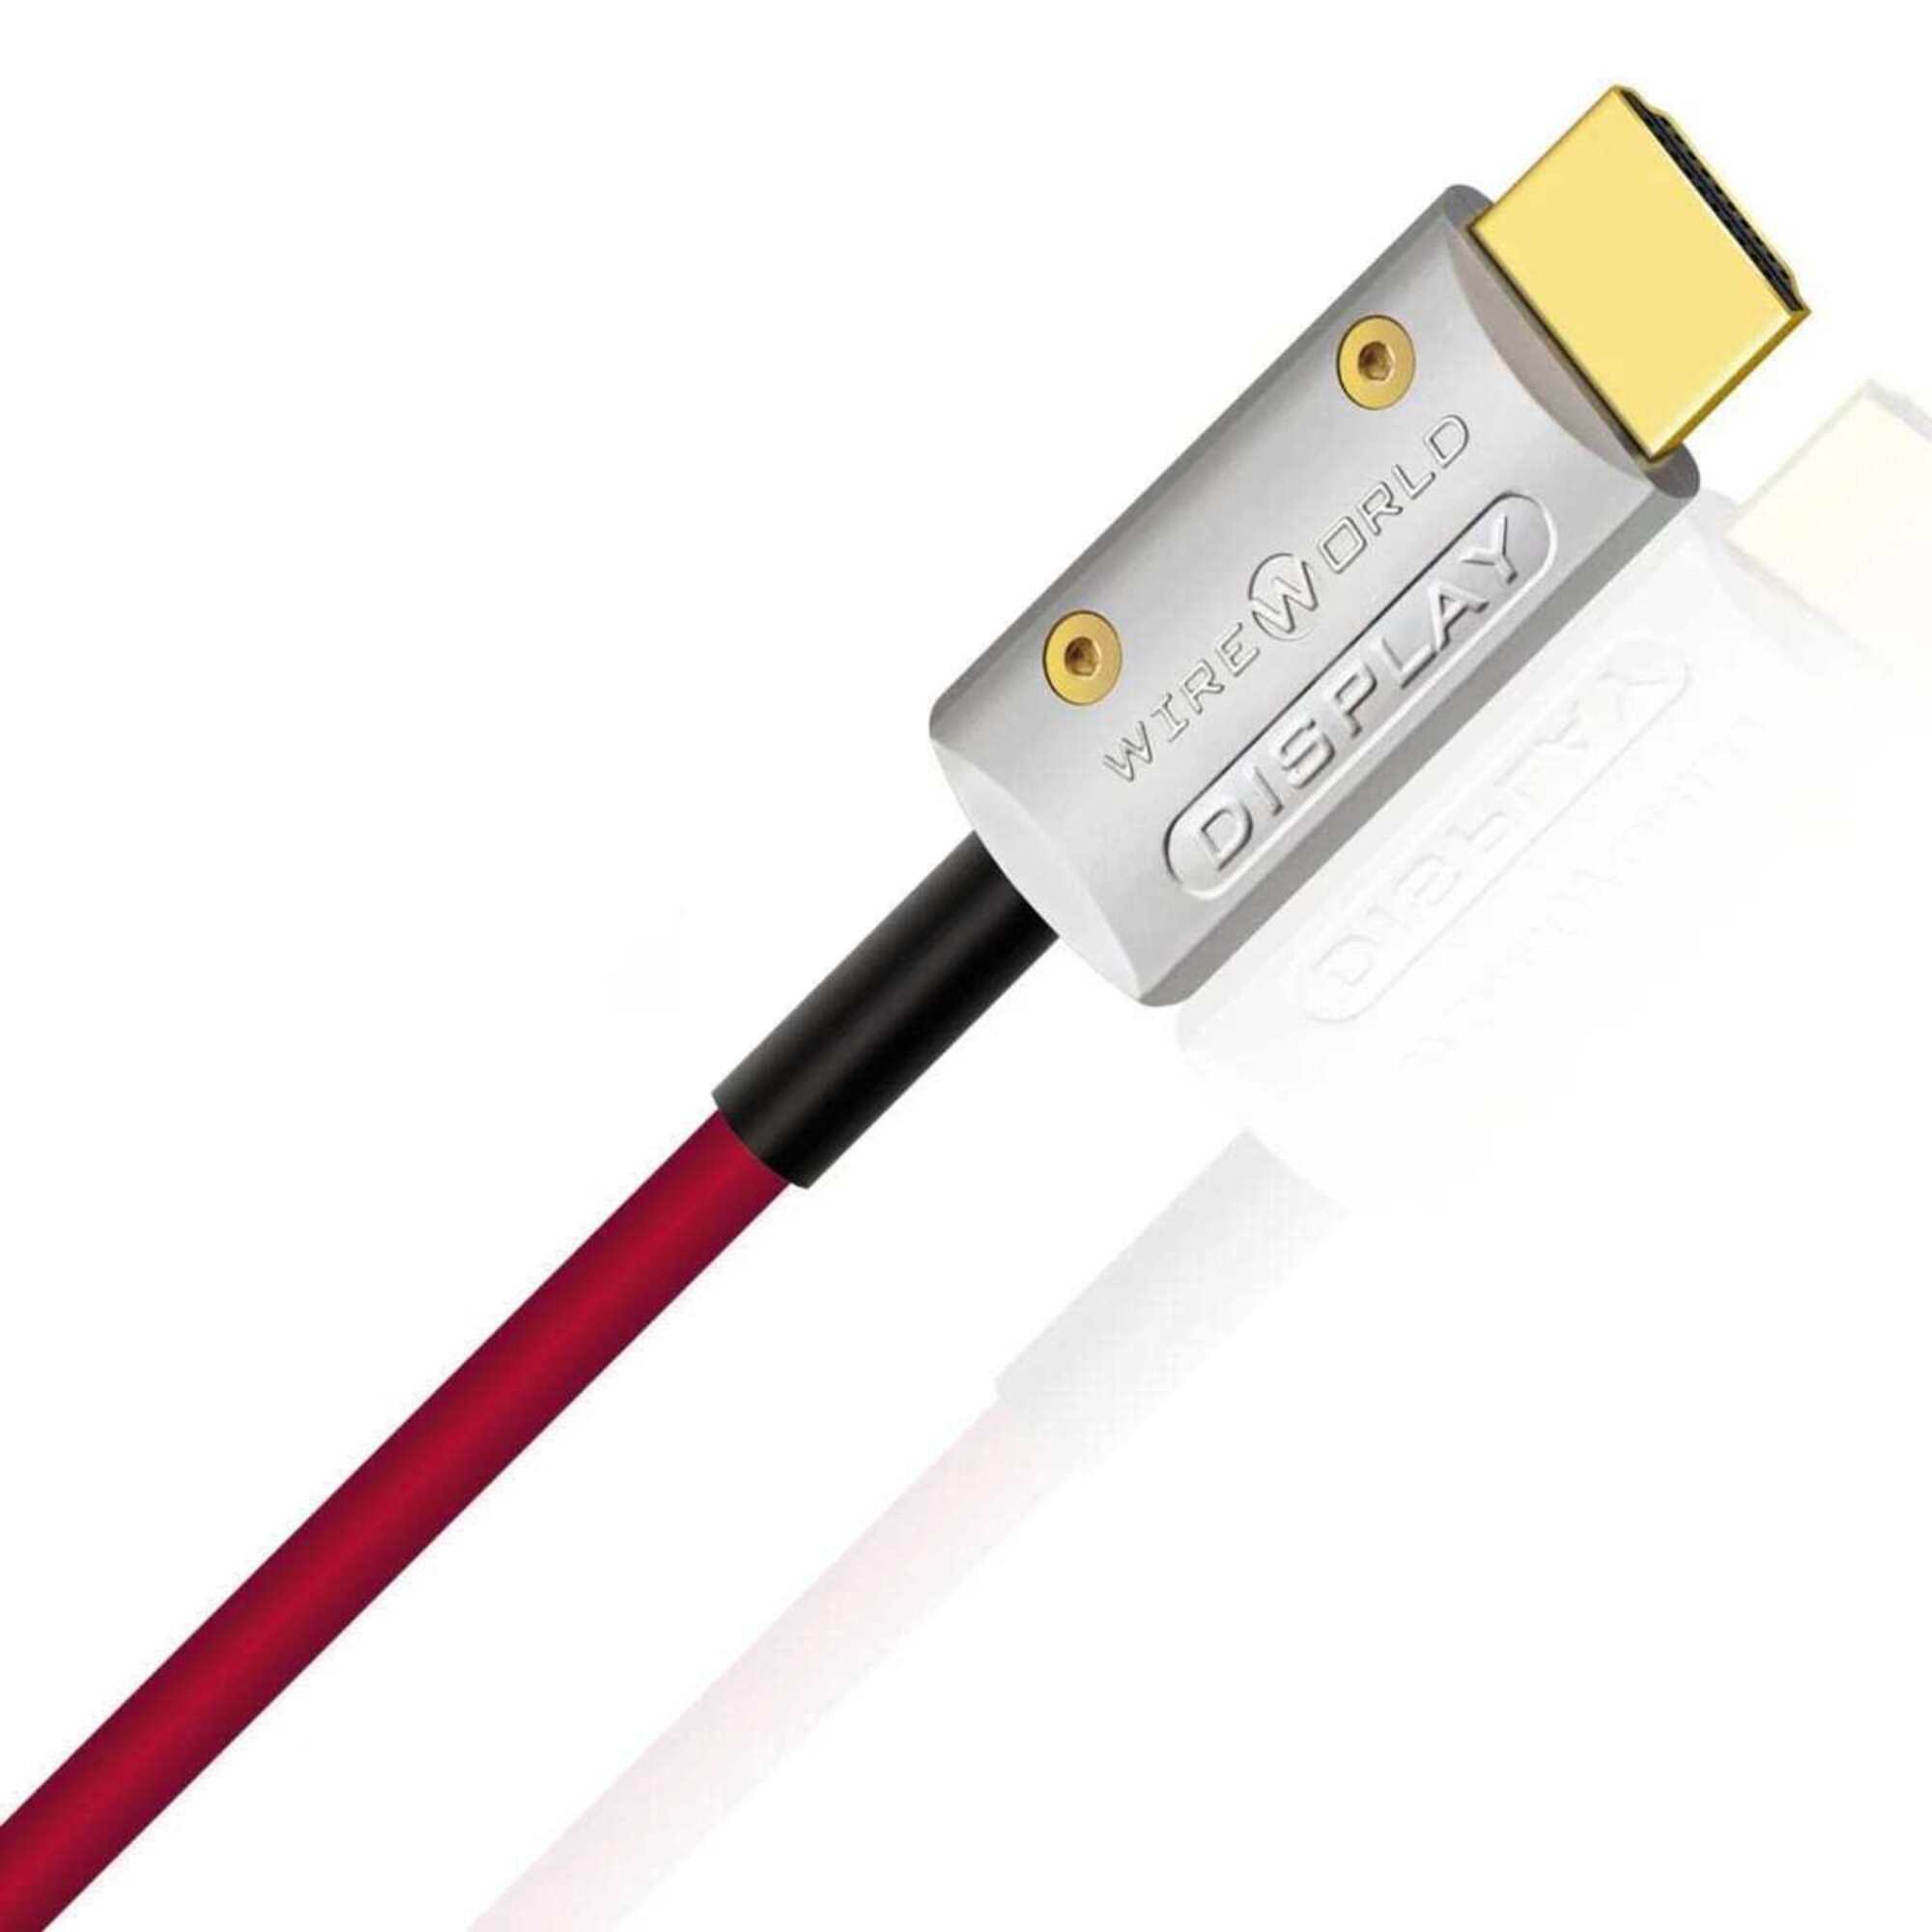 HDMI кабели Wire World Starlight HDMI - 48G/8K 15.0m пульт huayu для world vision wv t35 t55 t60m hvd0210